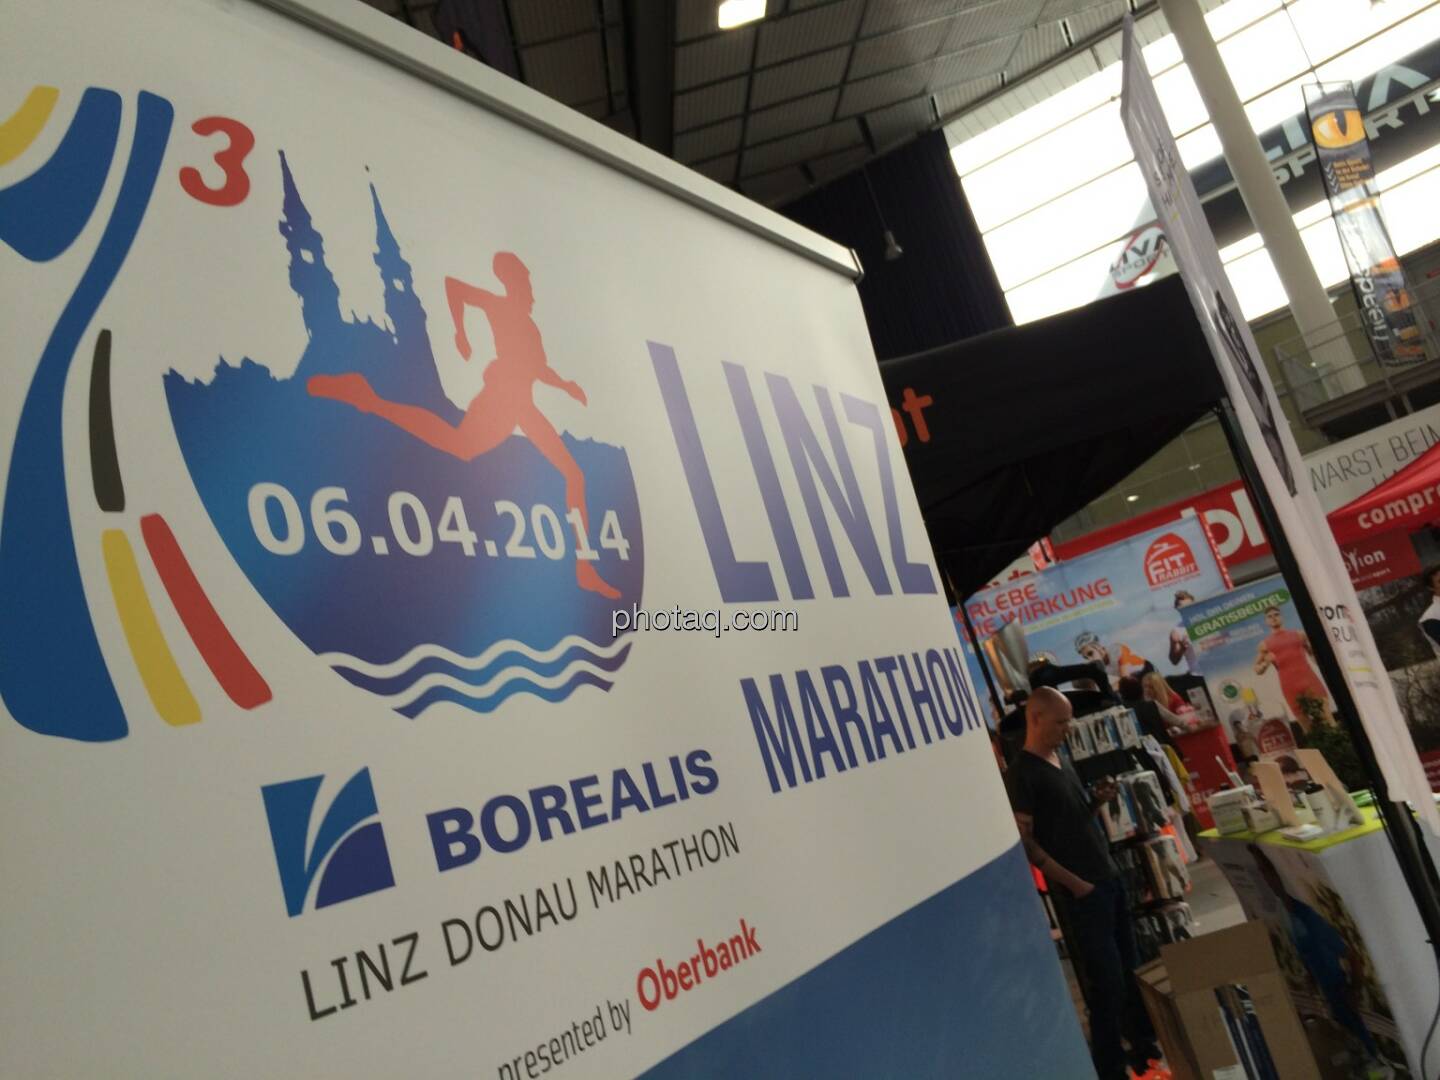 Borealis Linz Marathon